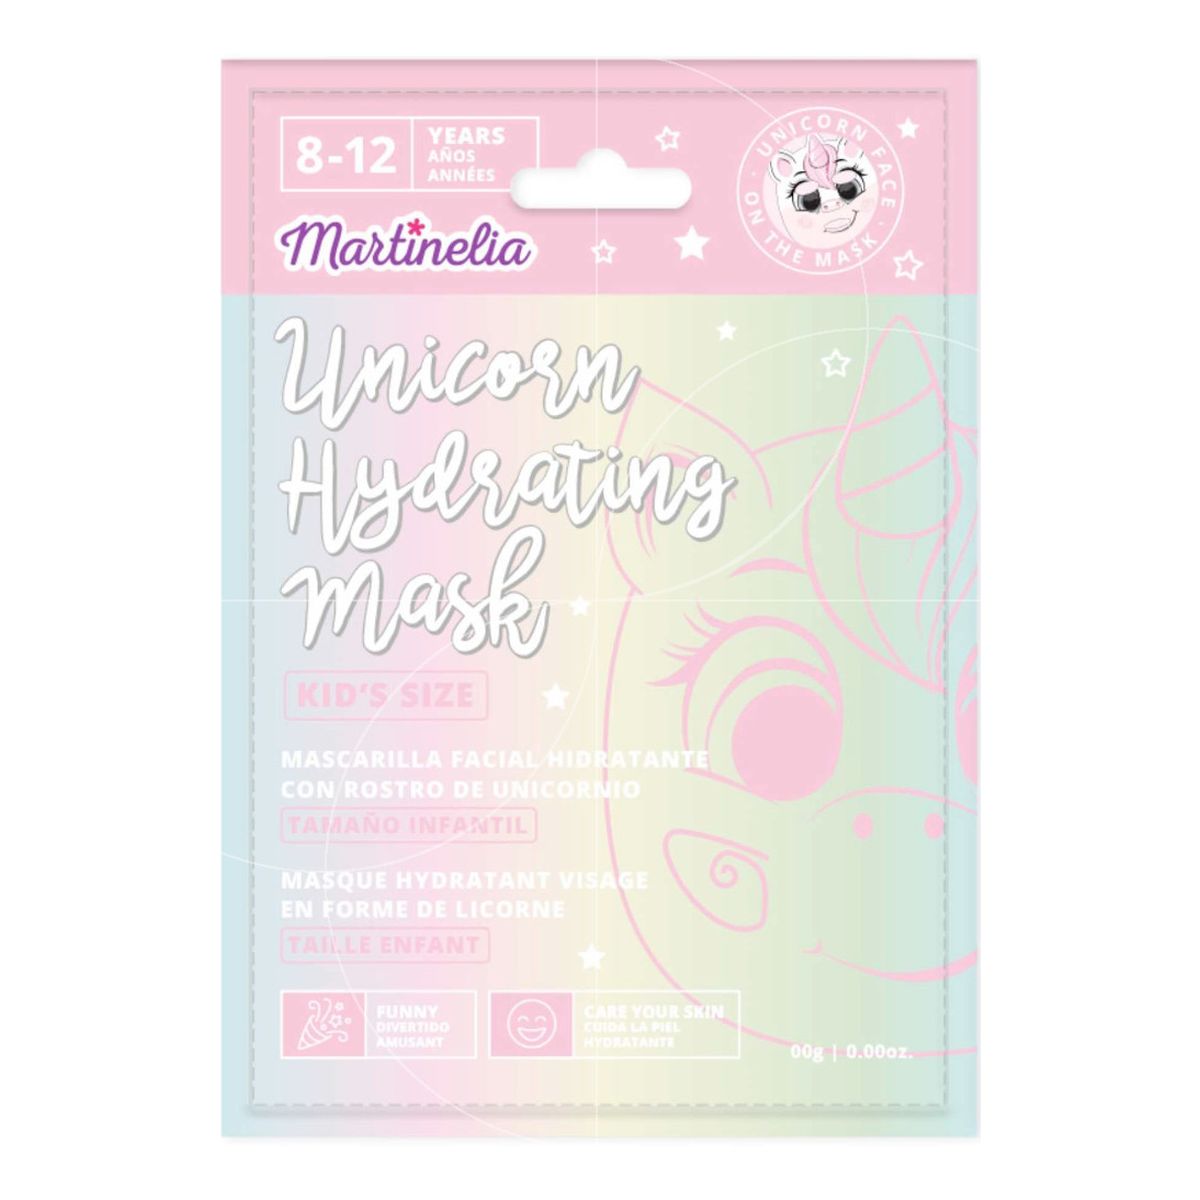 Martinelia Mascarilla unicornio hidratante martinelia-MA-77010-MARTINELIA 23g